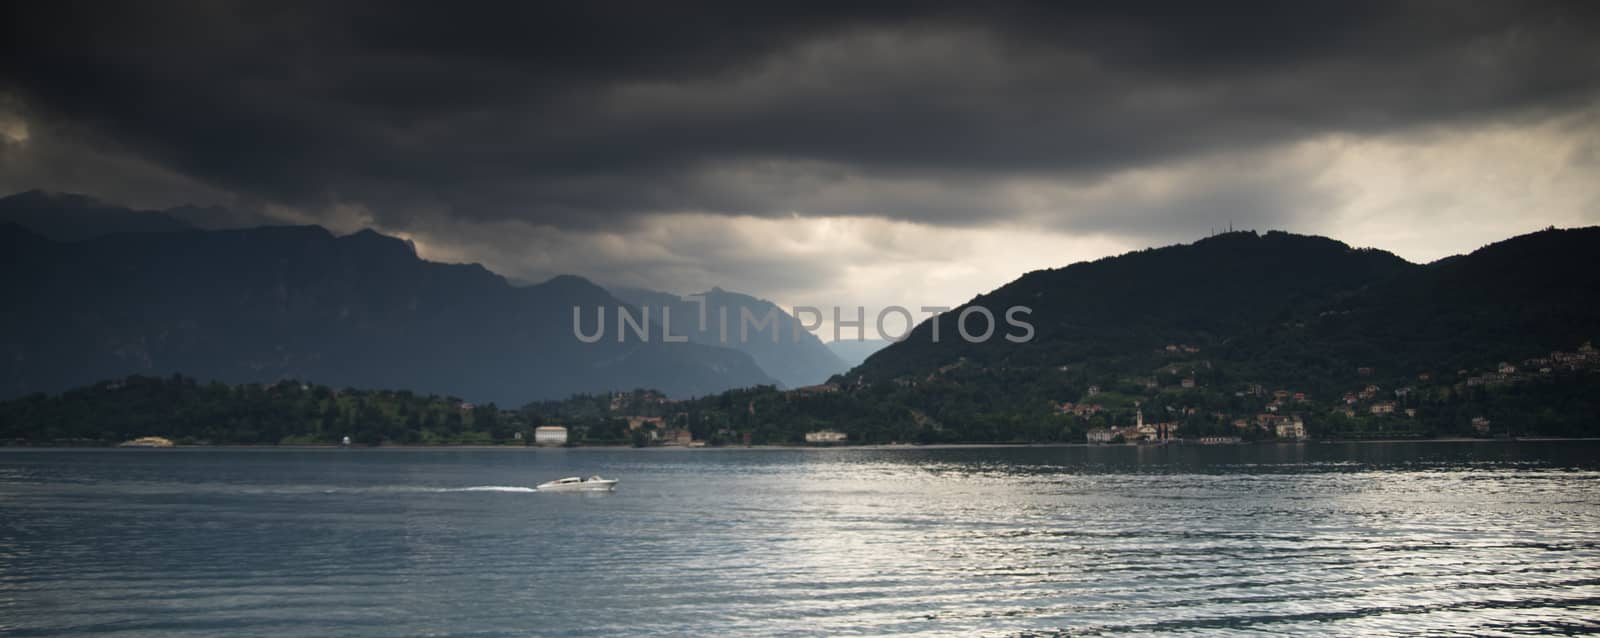 Travel on water of Como lake near Bellagio villas